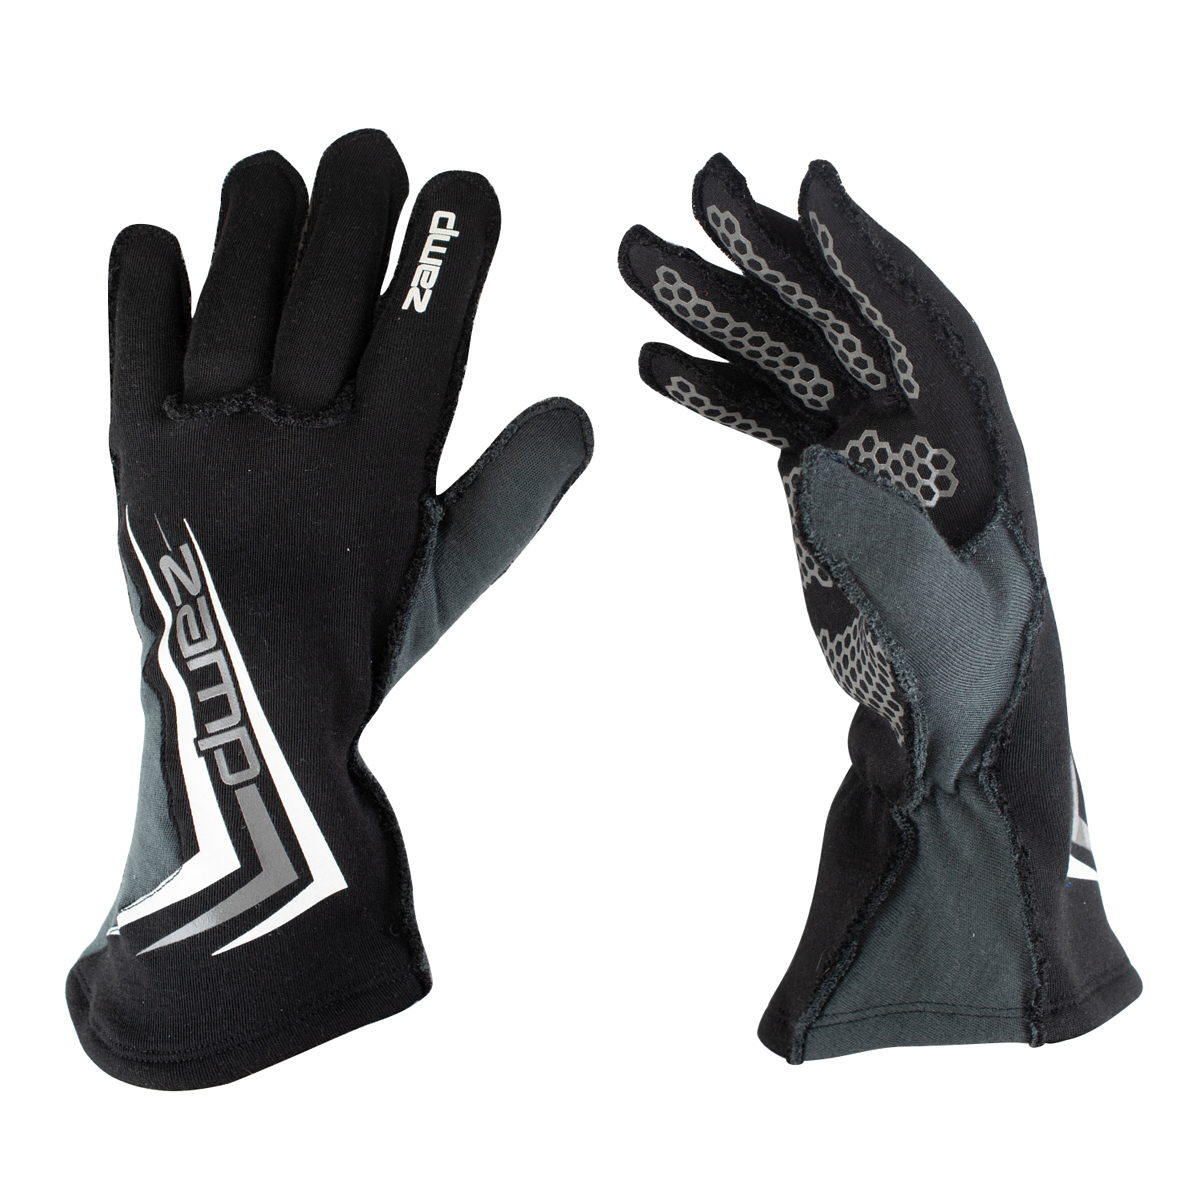 Zamp Racing RG20003M Driving Gloves, ZR-60, SFI 3.3/5, Double Layer, Fire Retardant Fabric, Silicone Palm, Black, Medium, Pair